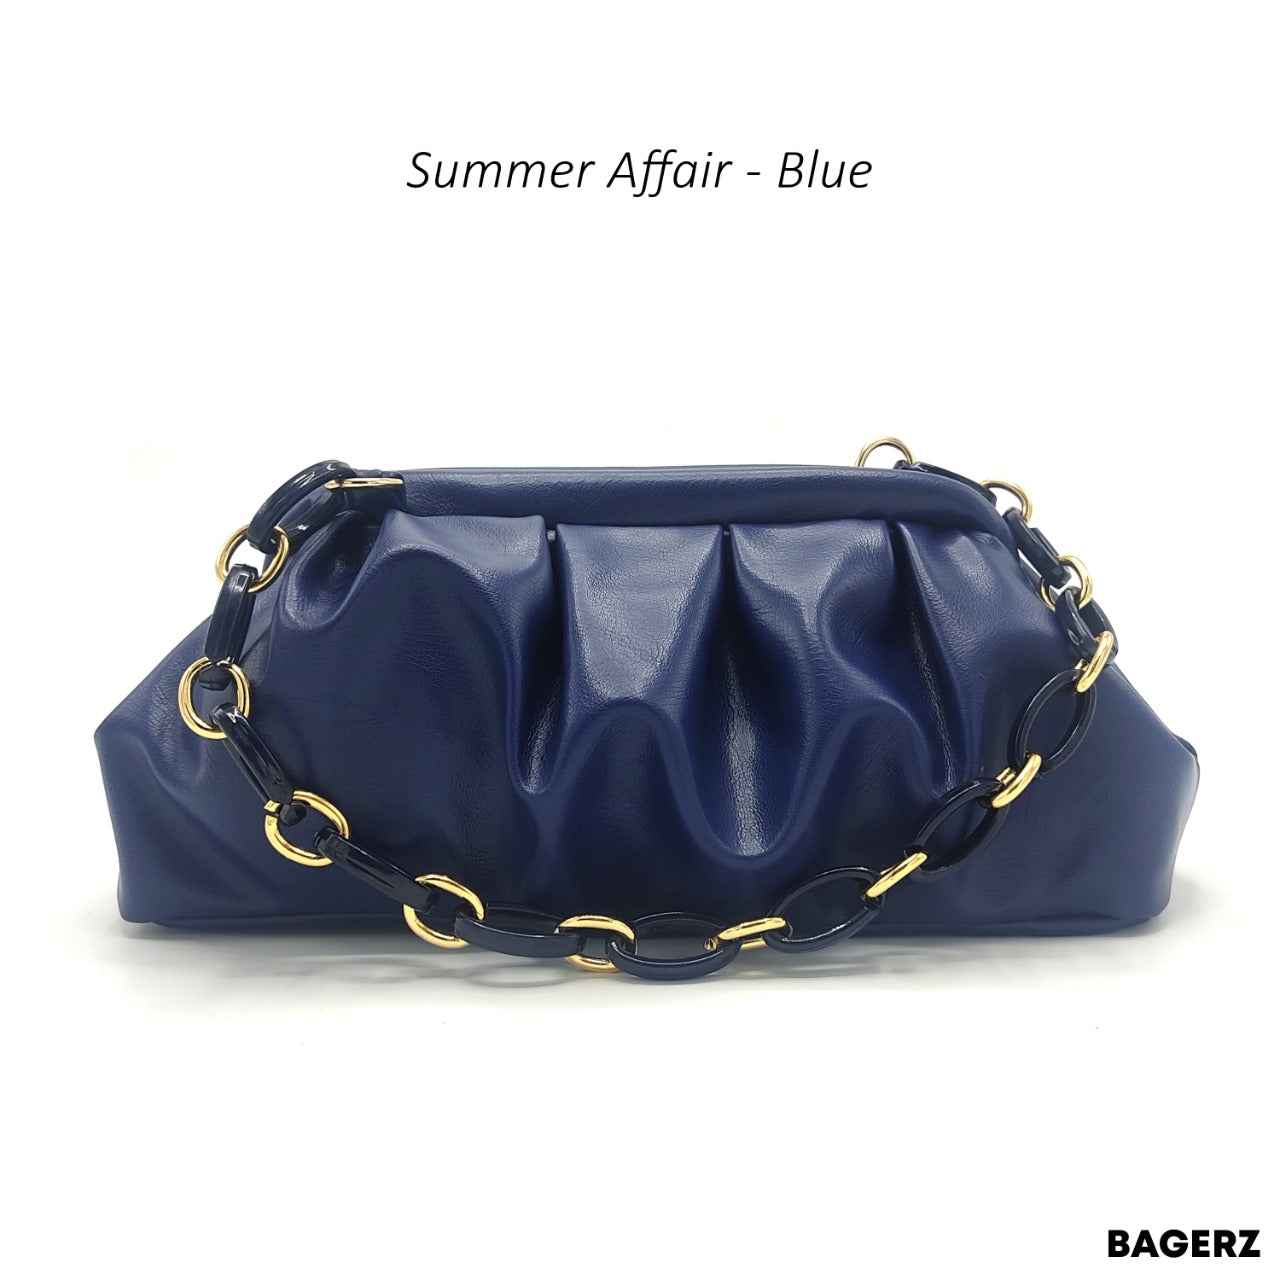 Summer Affair - Blue